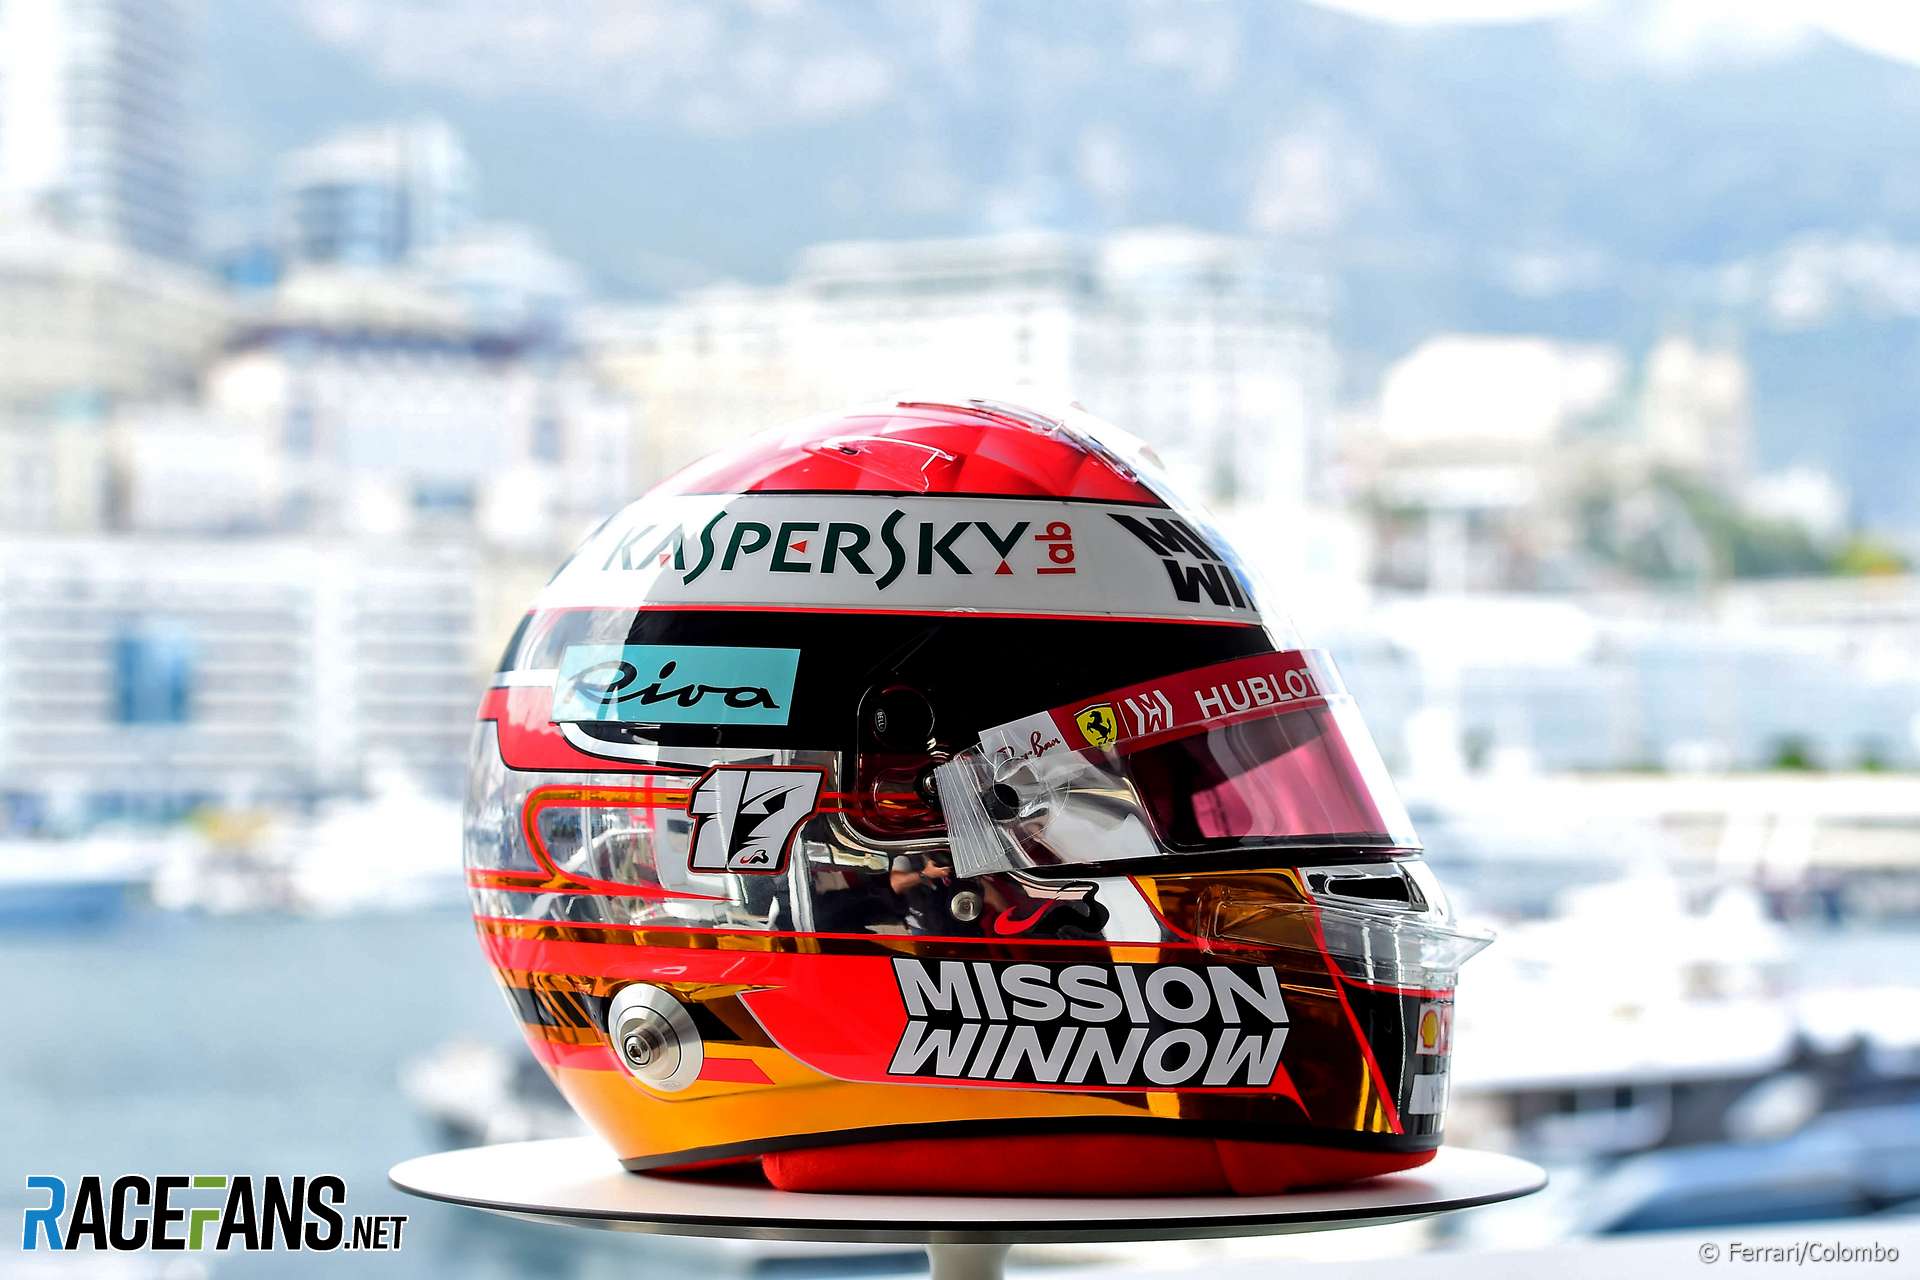 Charles Leclerc helmet, Monaco, 2019